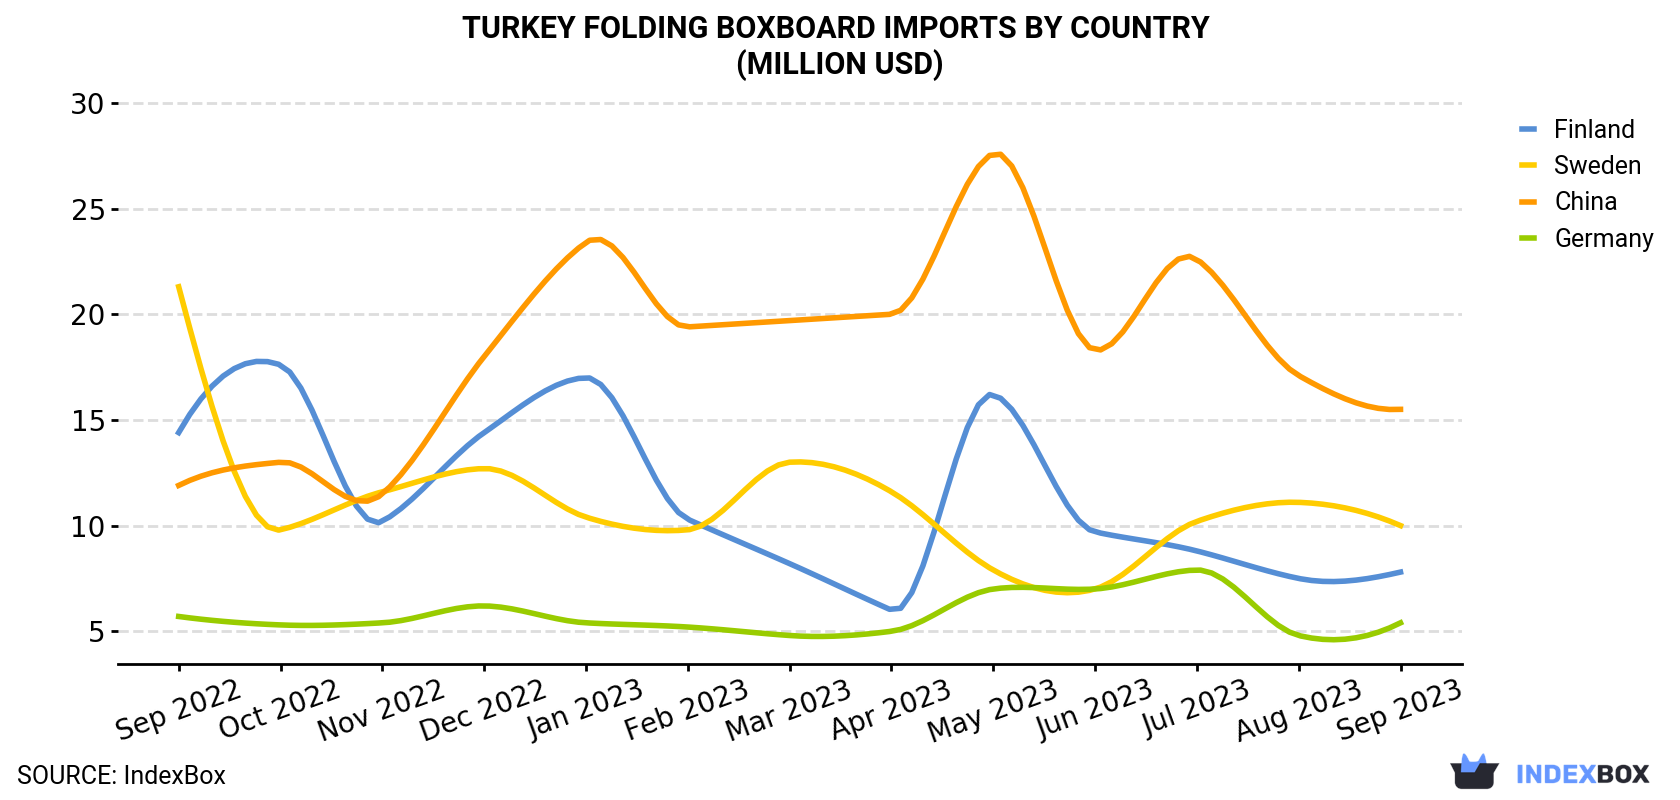 Turkey Folding Boxboard Imports By Country (Million USD)